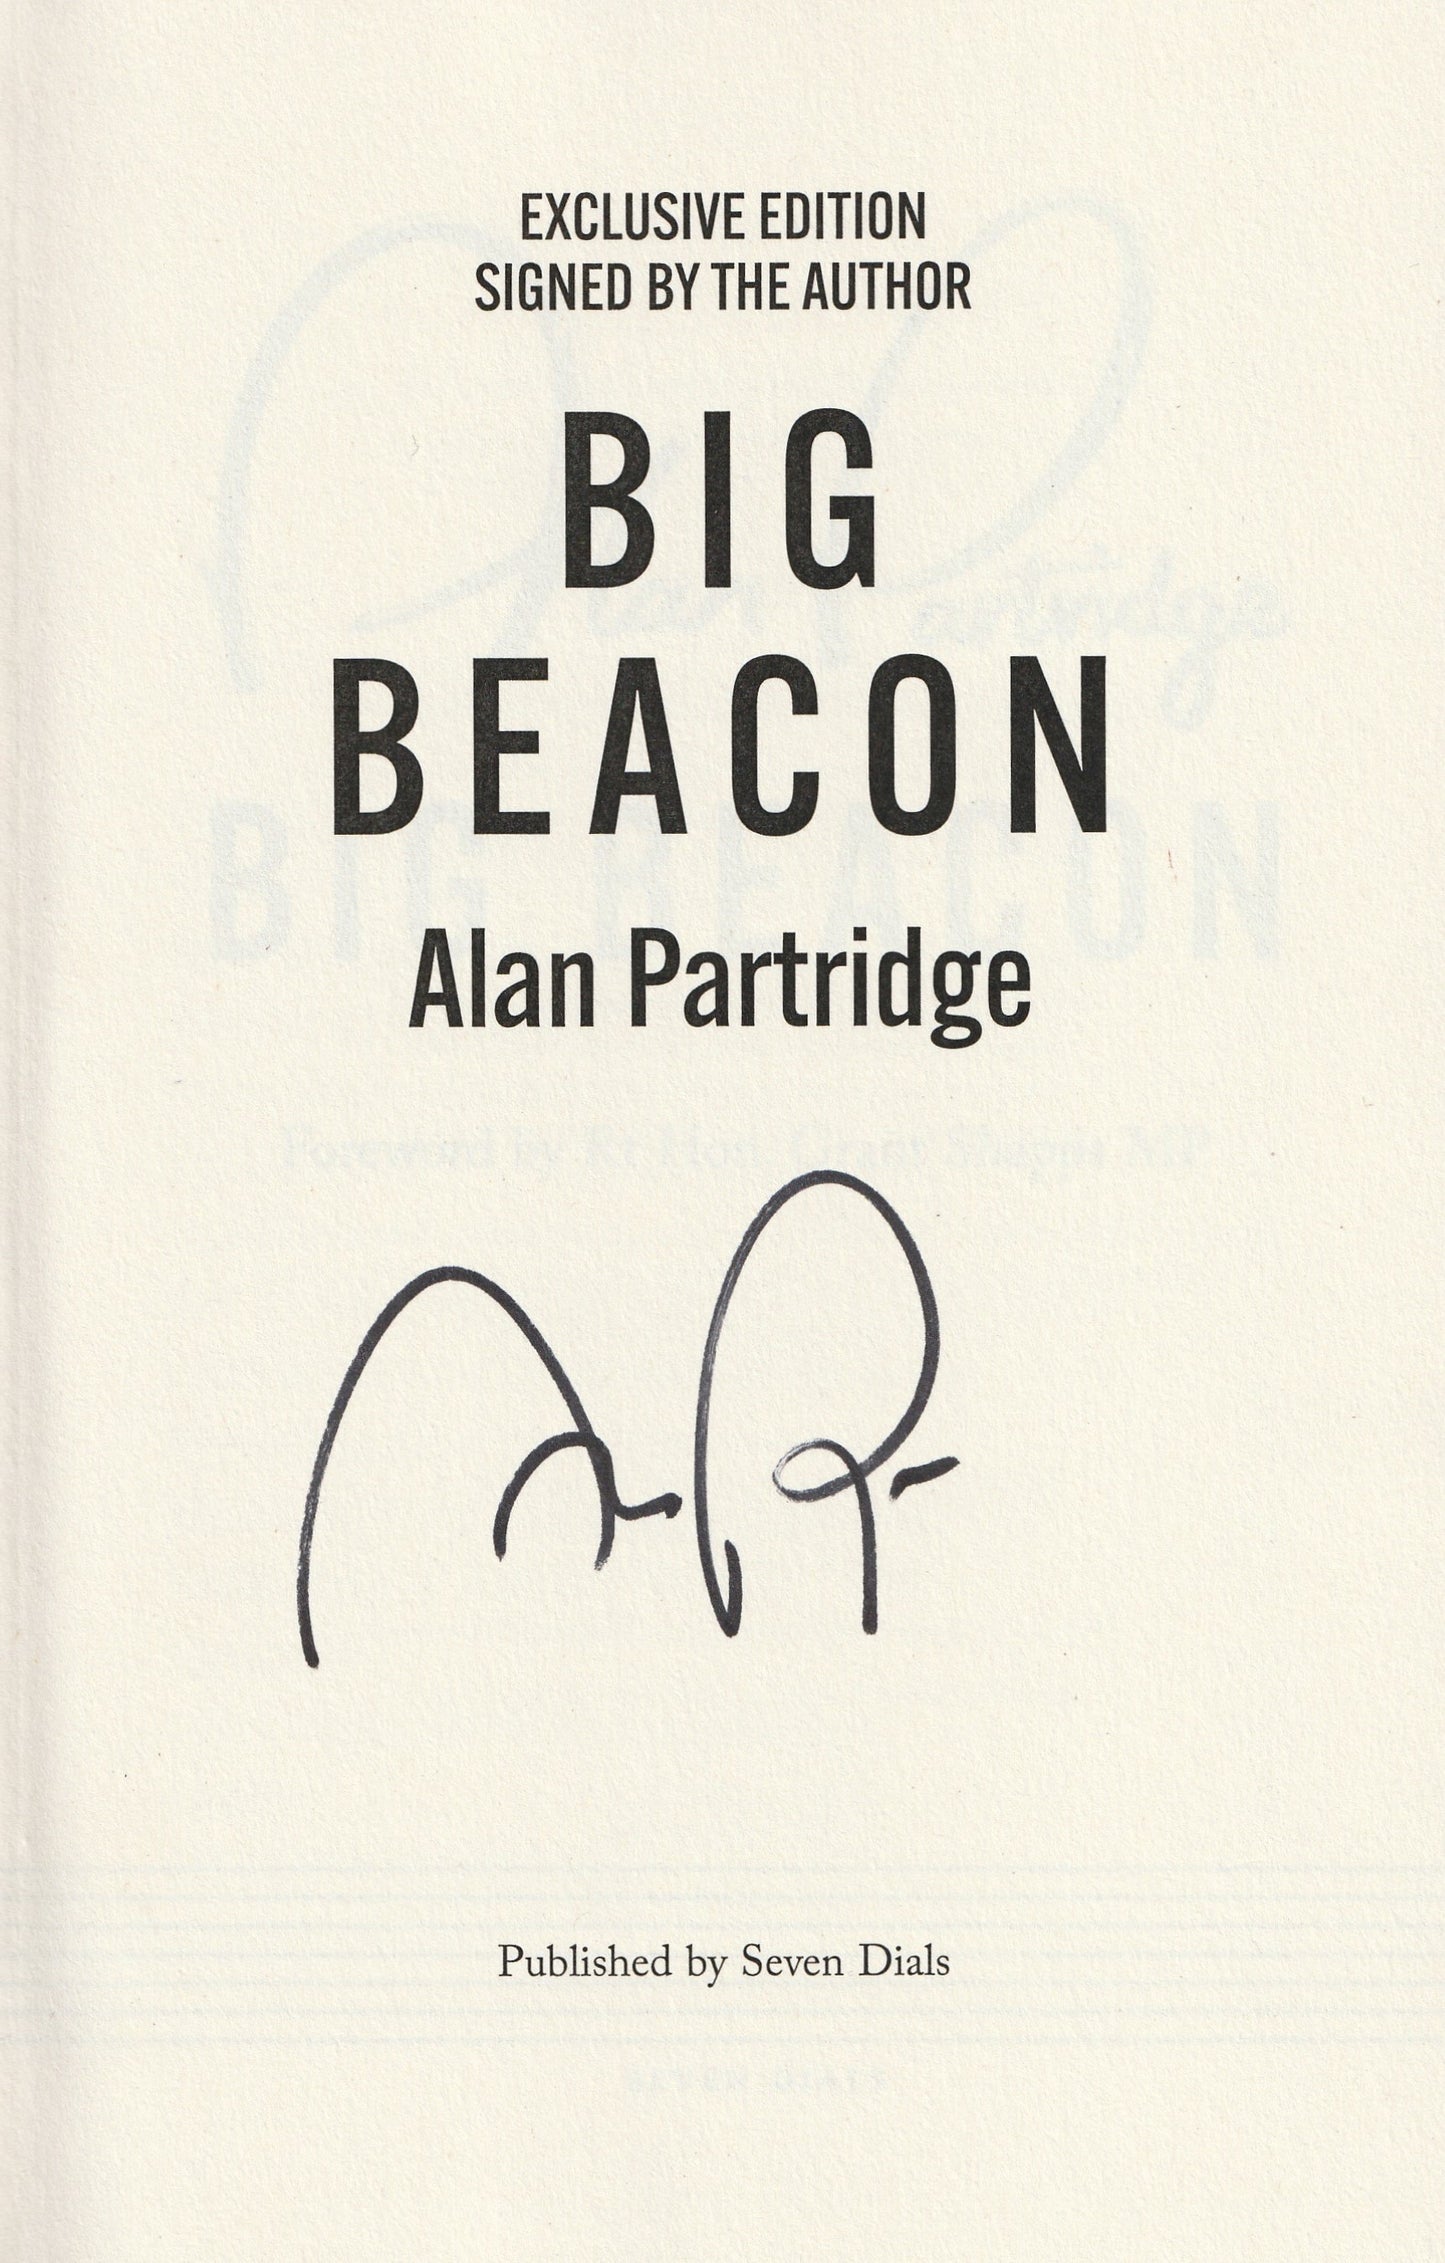 Steve Coogan as Alan Partridge